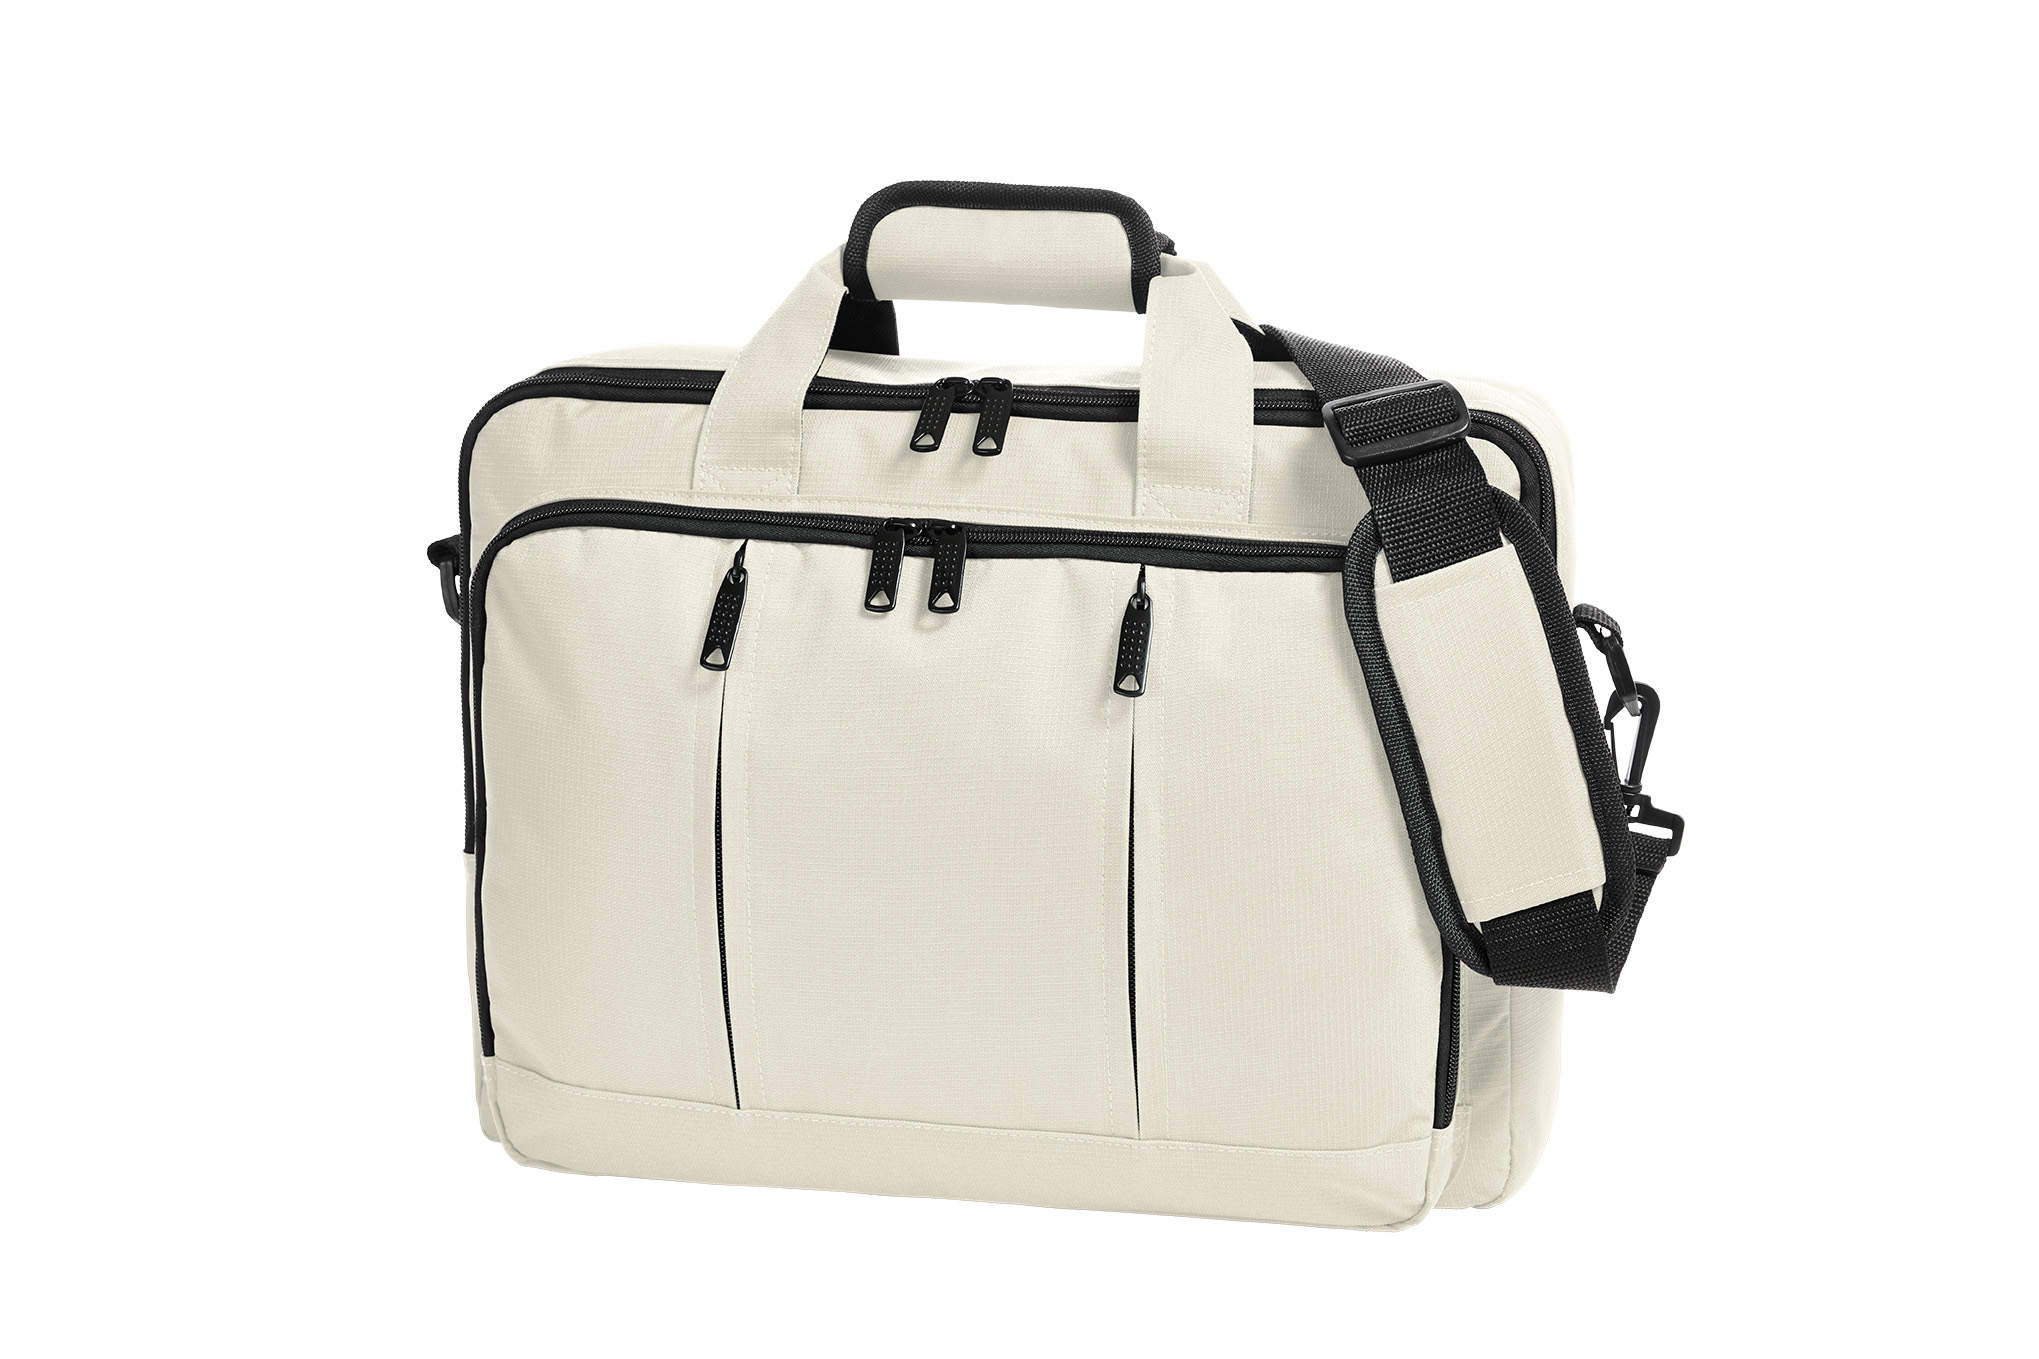 17-inch computer backpack, Halfar luggage and bags, Halfar